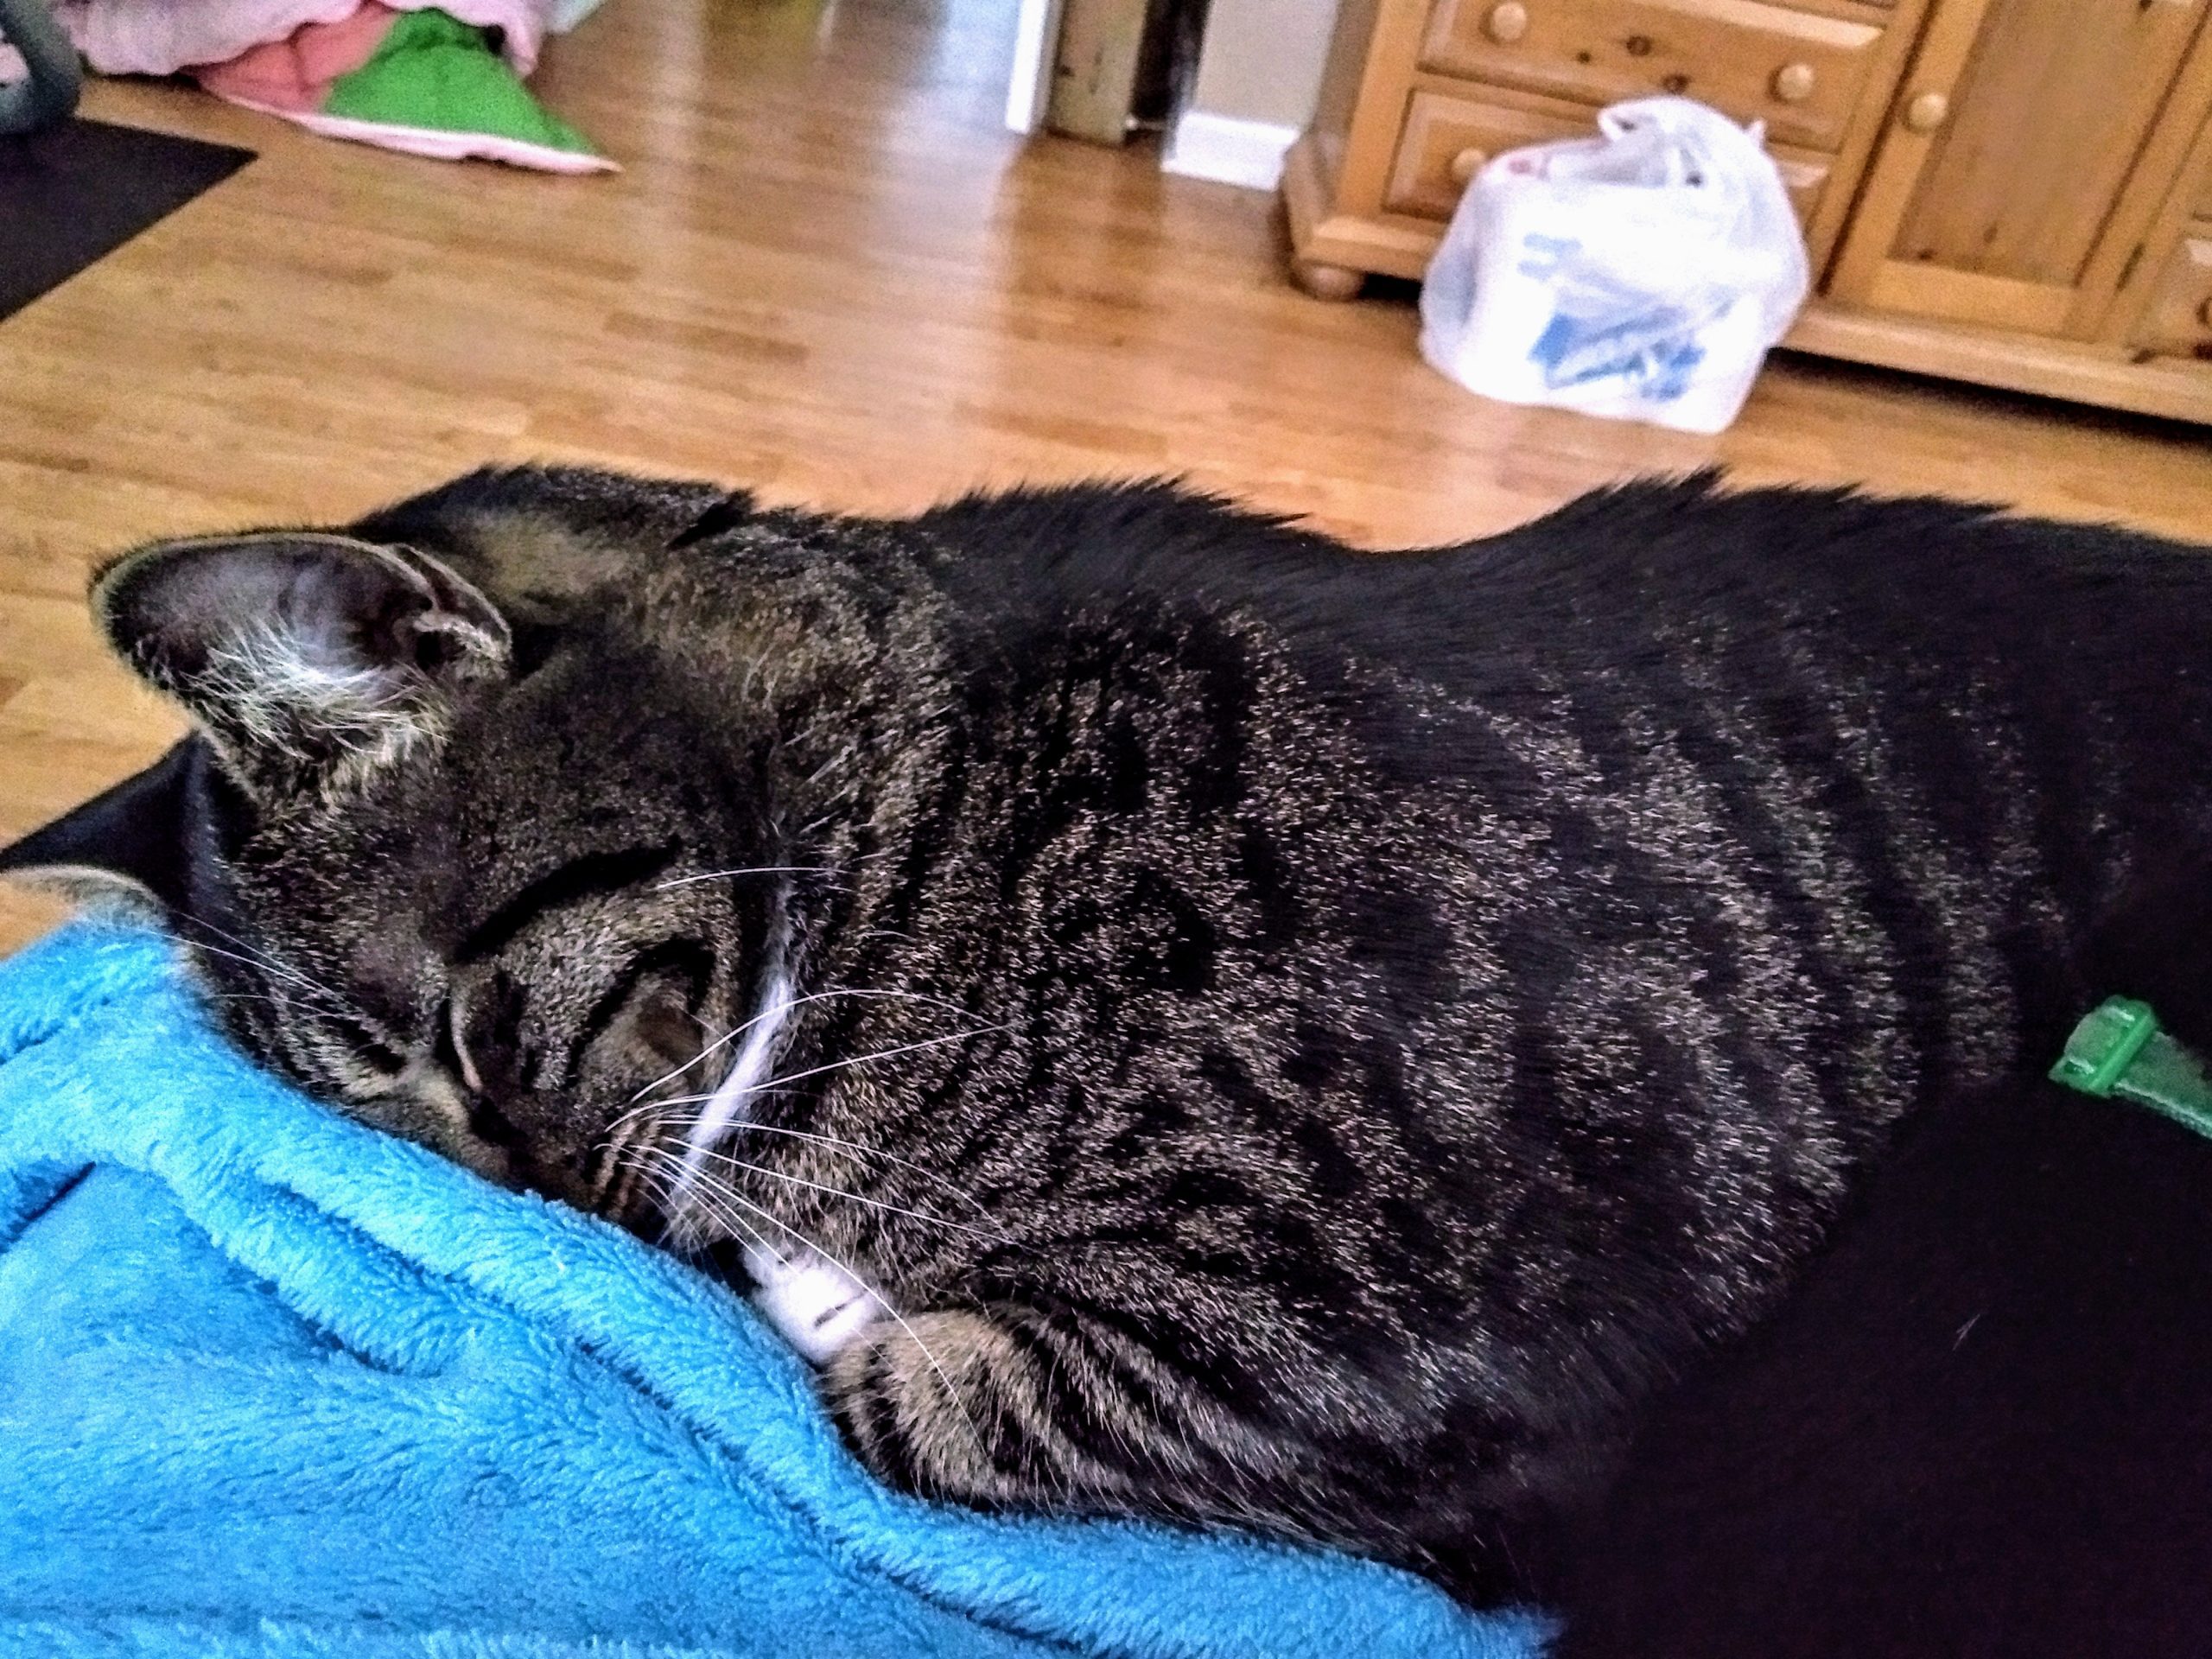 Cat sleeping on blue blanket